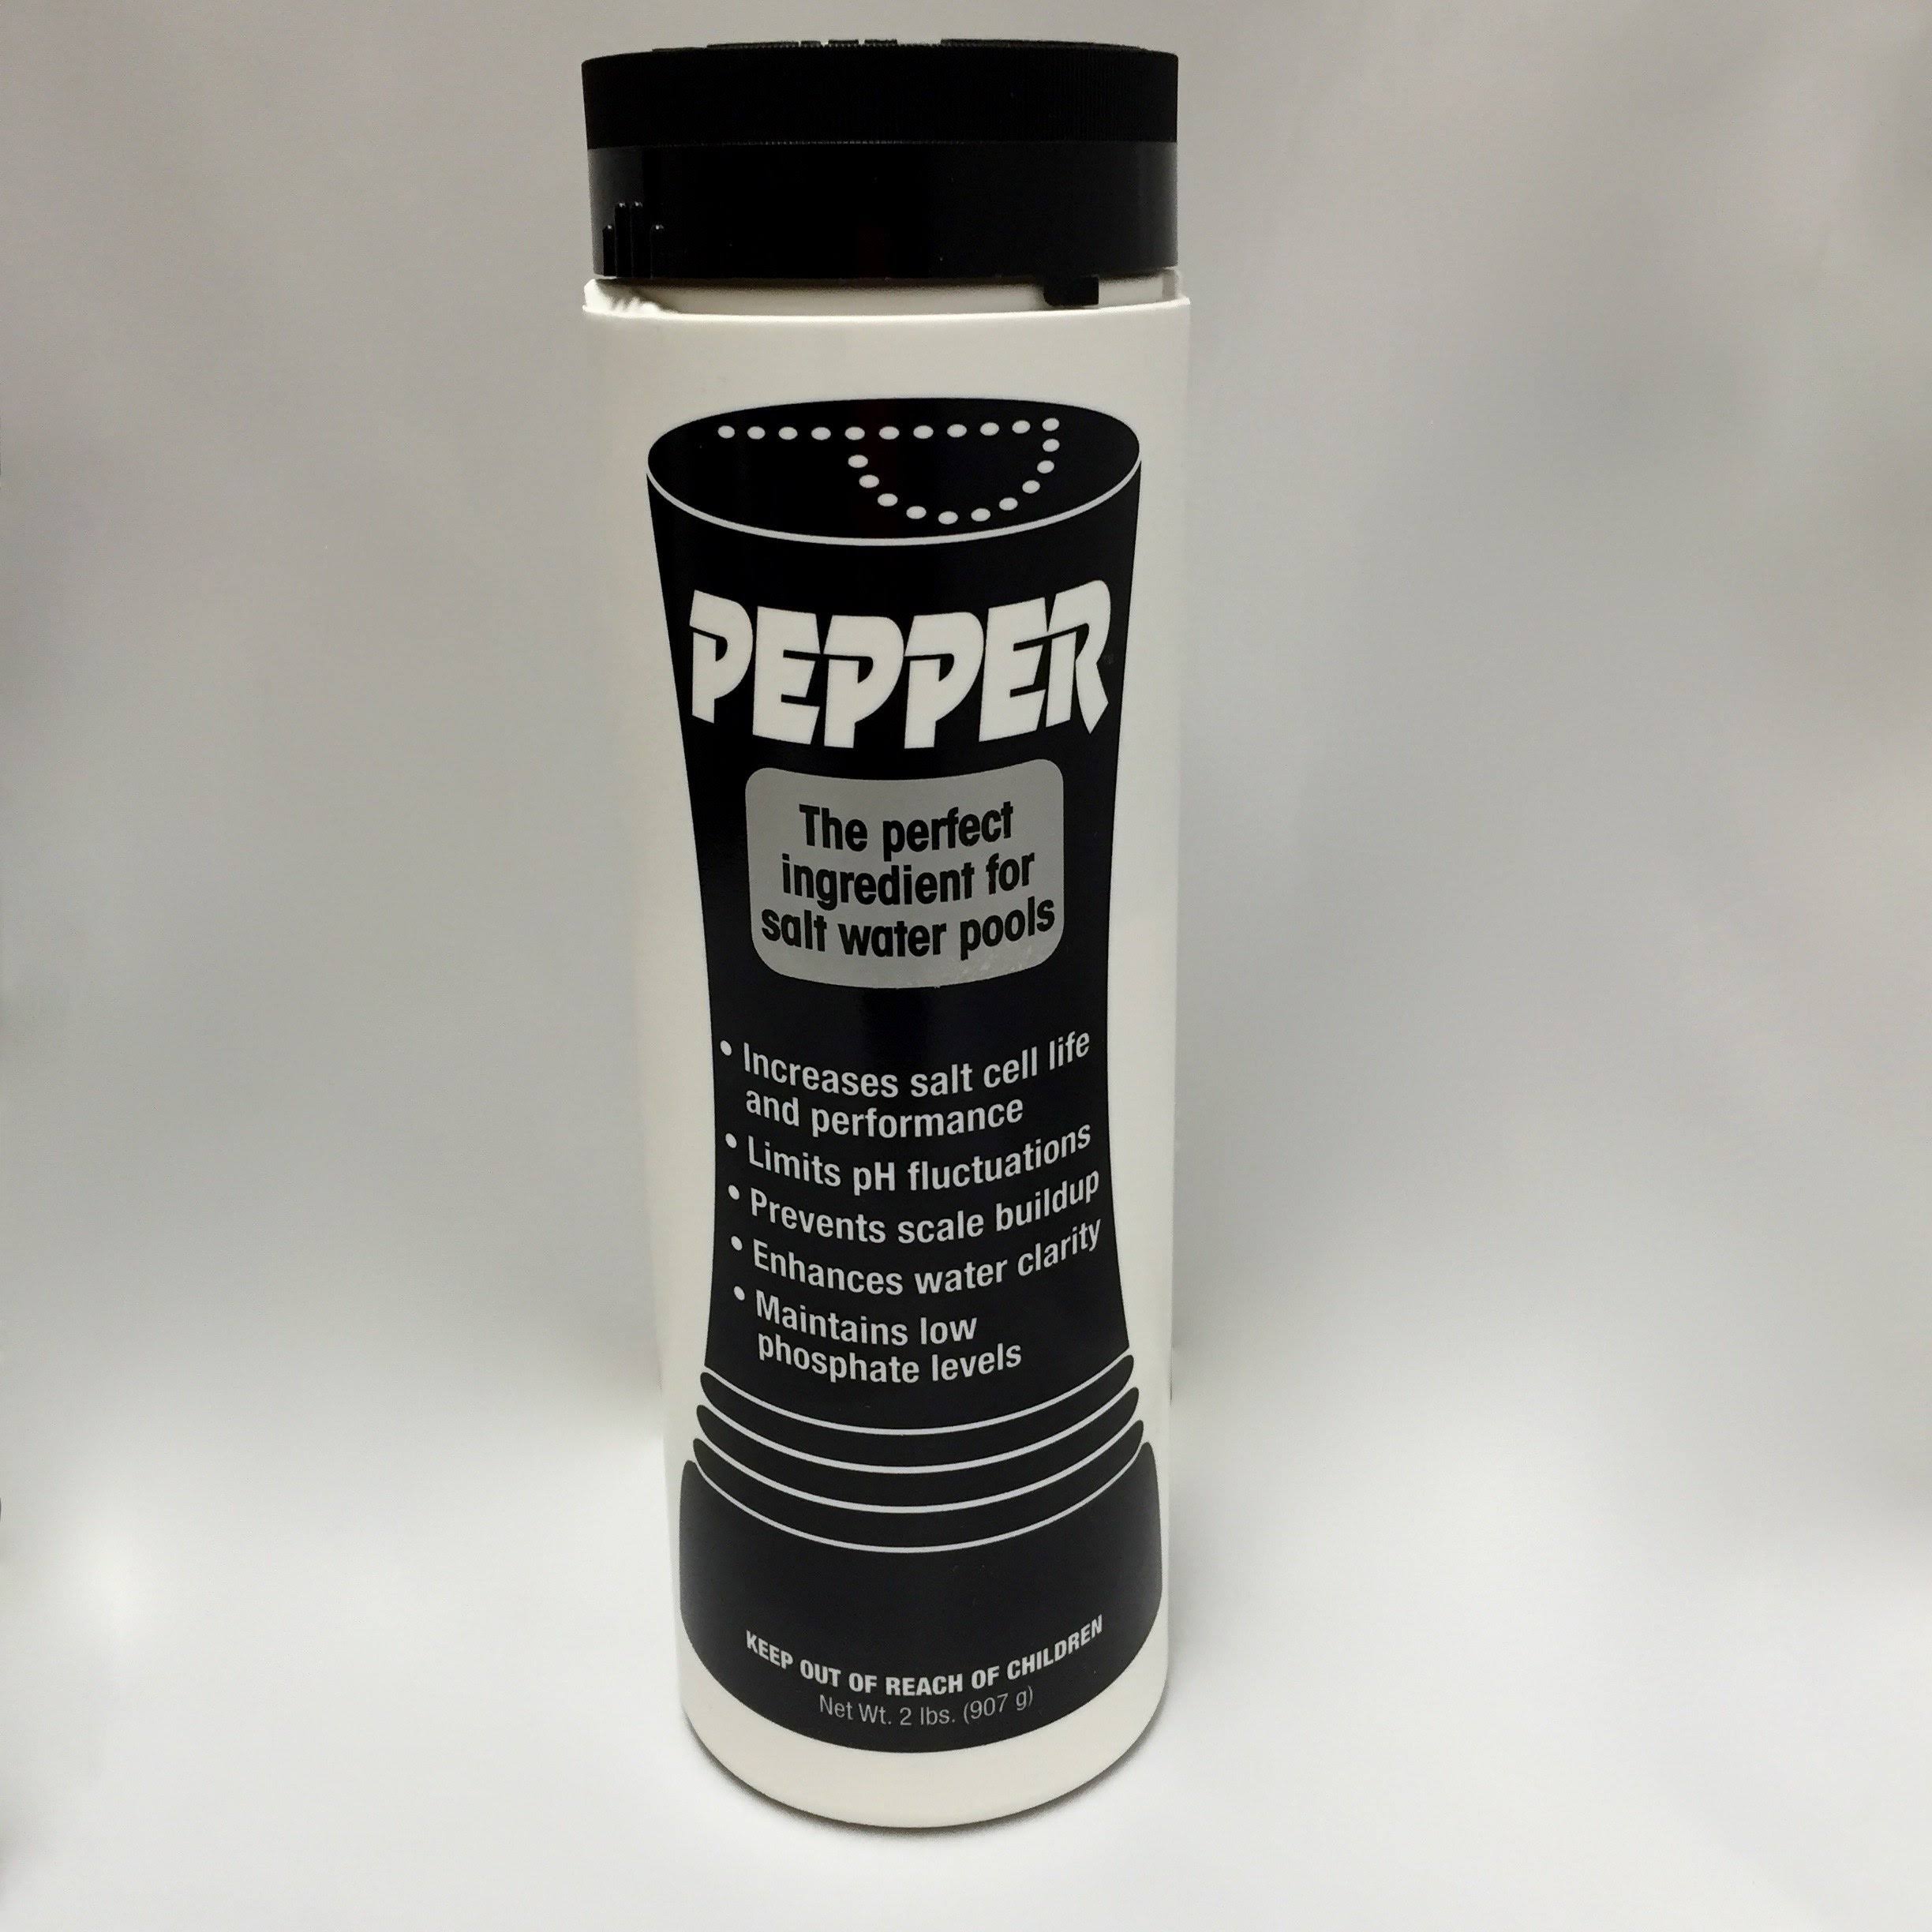 Pepper For Salt Water Pools - 2lbs